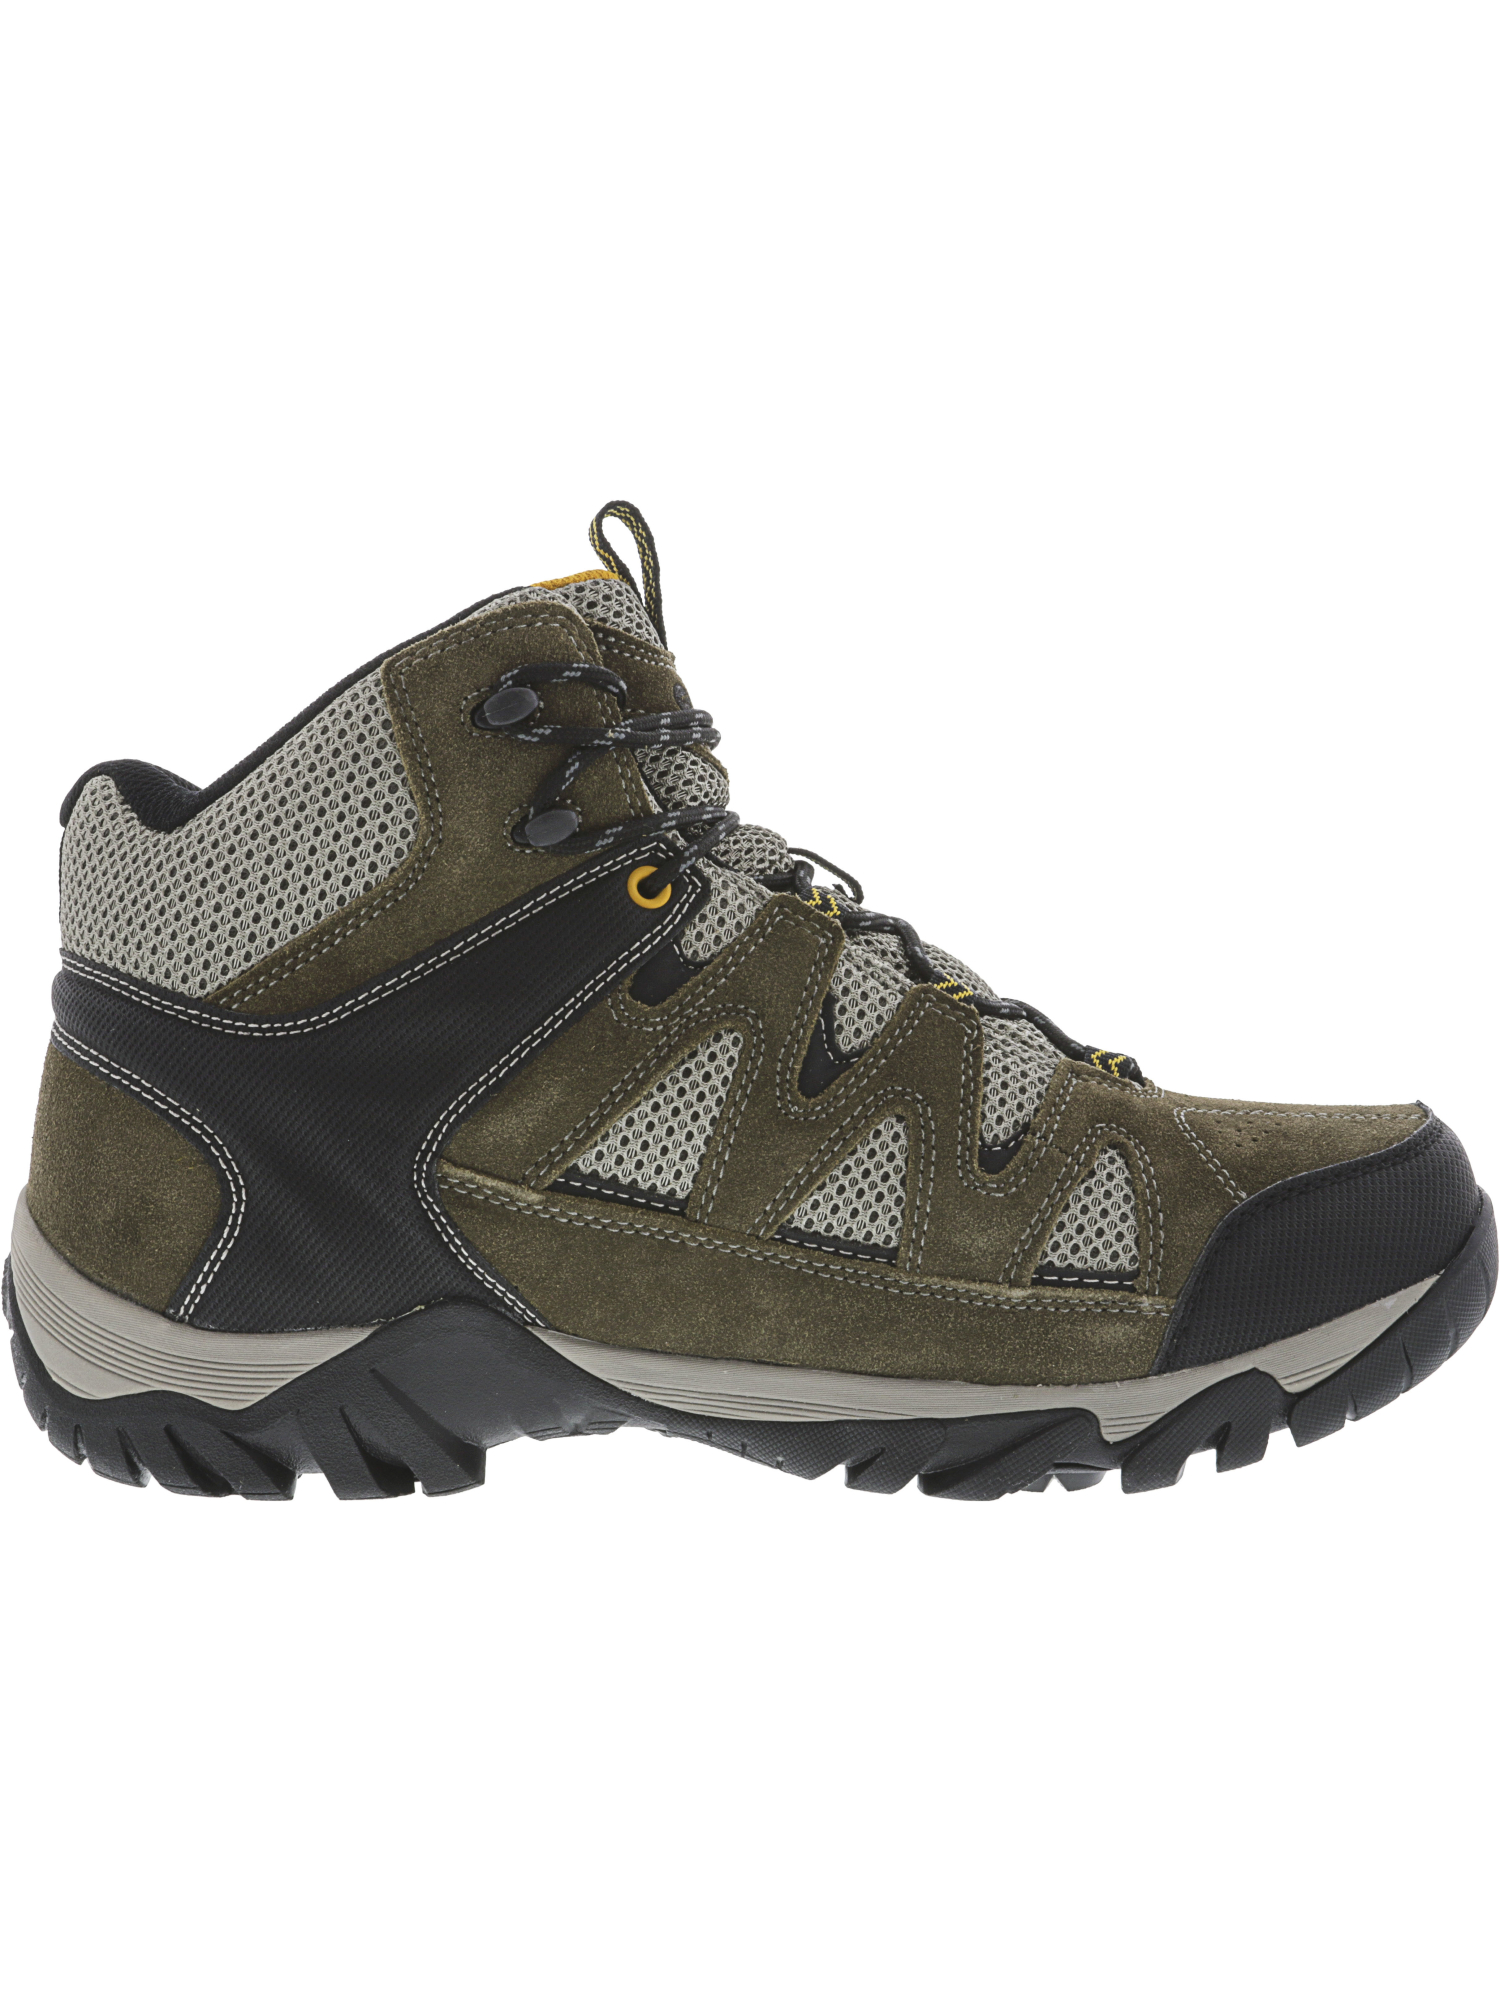 Hi-Tec Men's Sonorous Mid I Wp Ankle-High Hiking Shoe | eBay